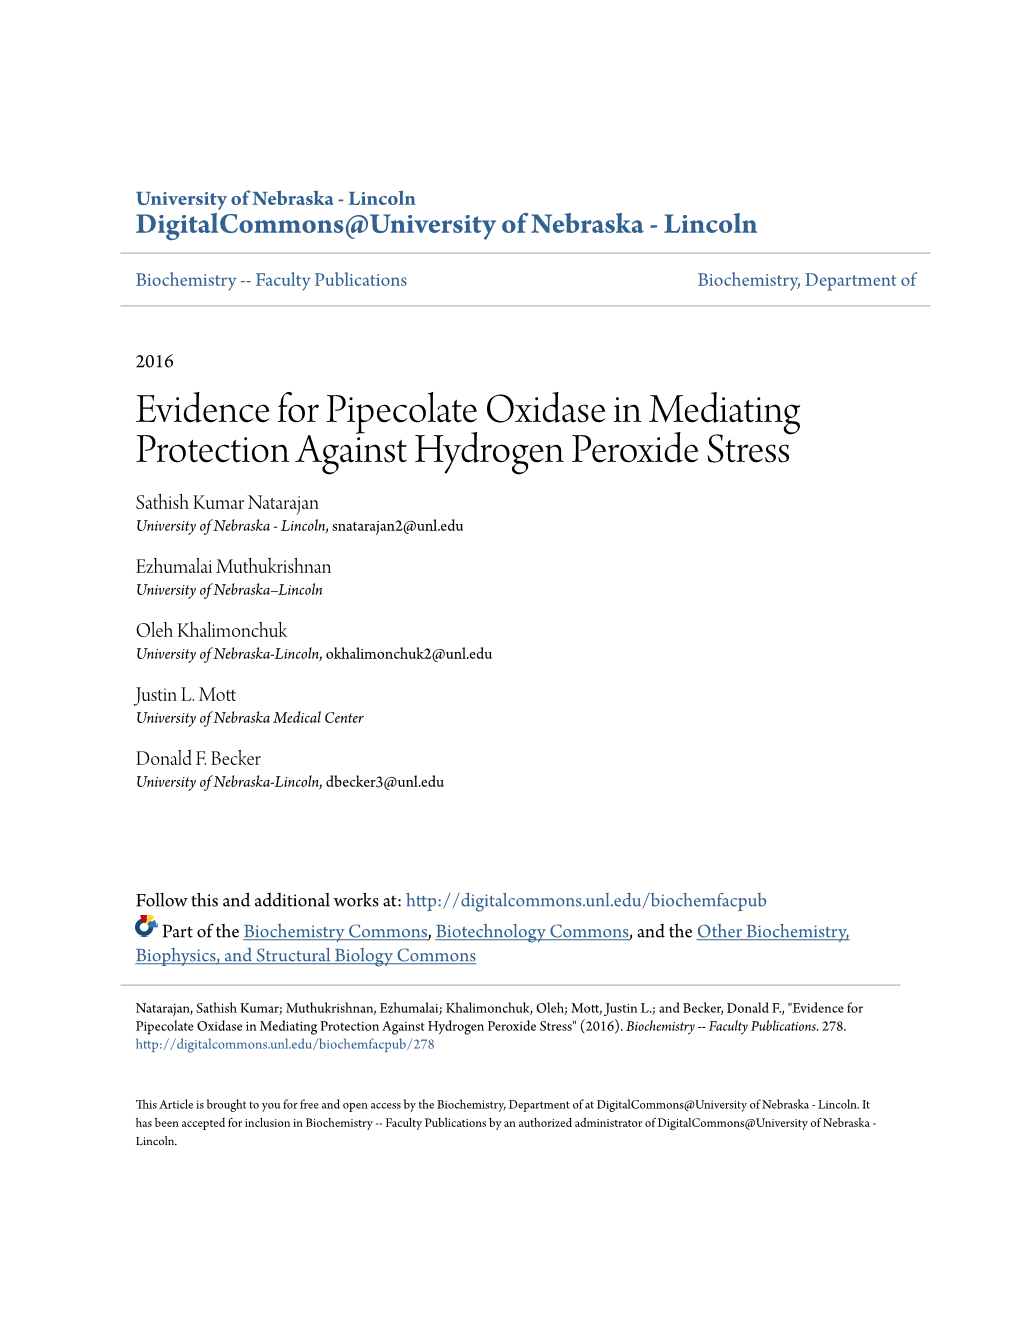 Evidence for Pipecolate Oxidase in Mediating Protection Against Hydrogen Peroxide Stress Sathish Kumar Natarajan University of Nebraska - Lincoln, Snatarajan2@Unl.Edu